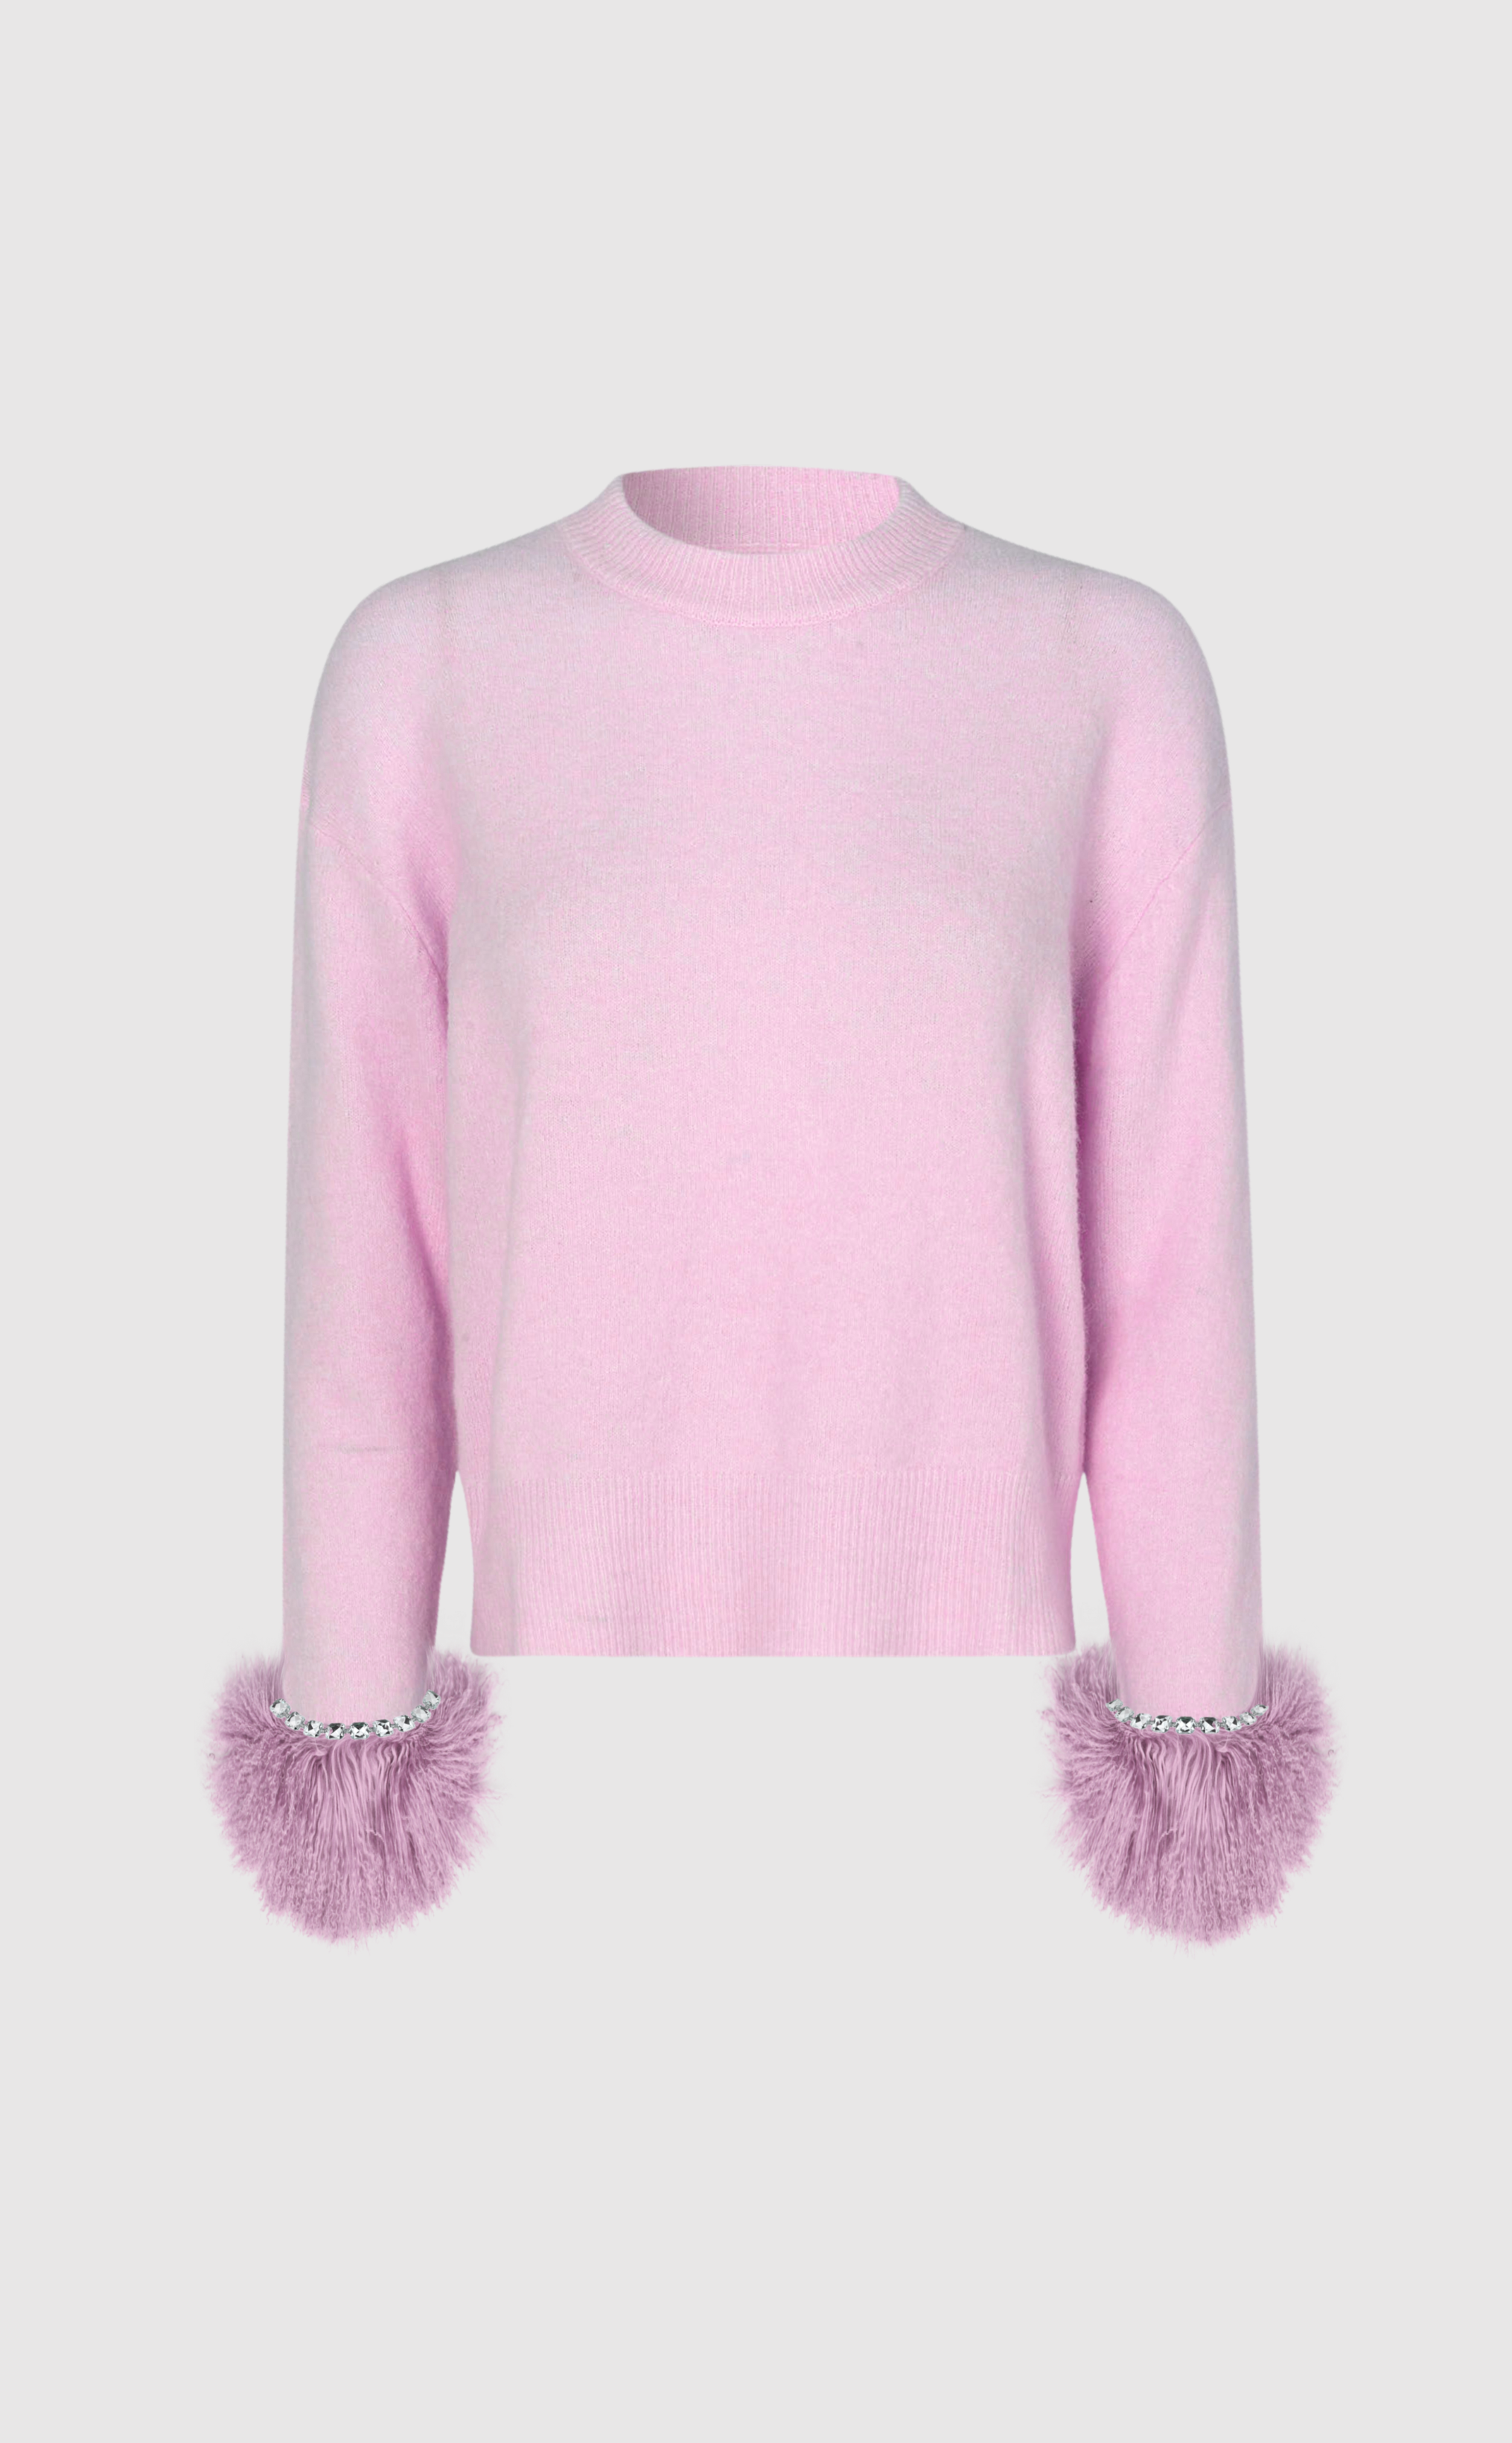 Gigi long sleeve sweater in pink